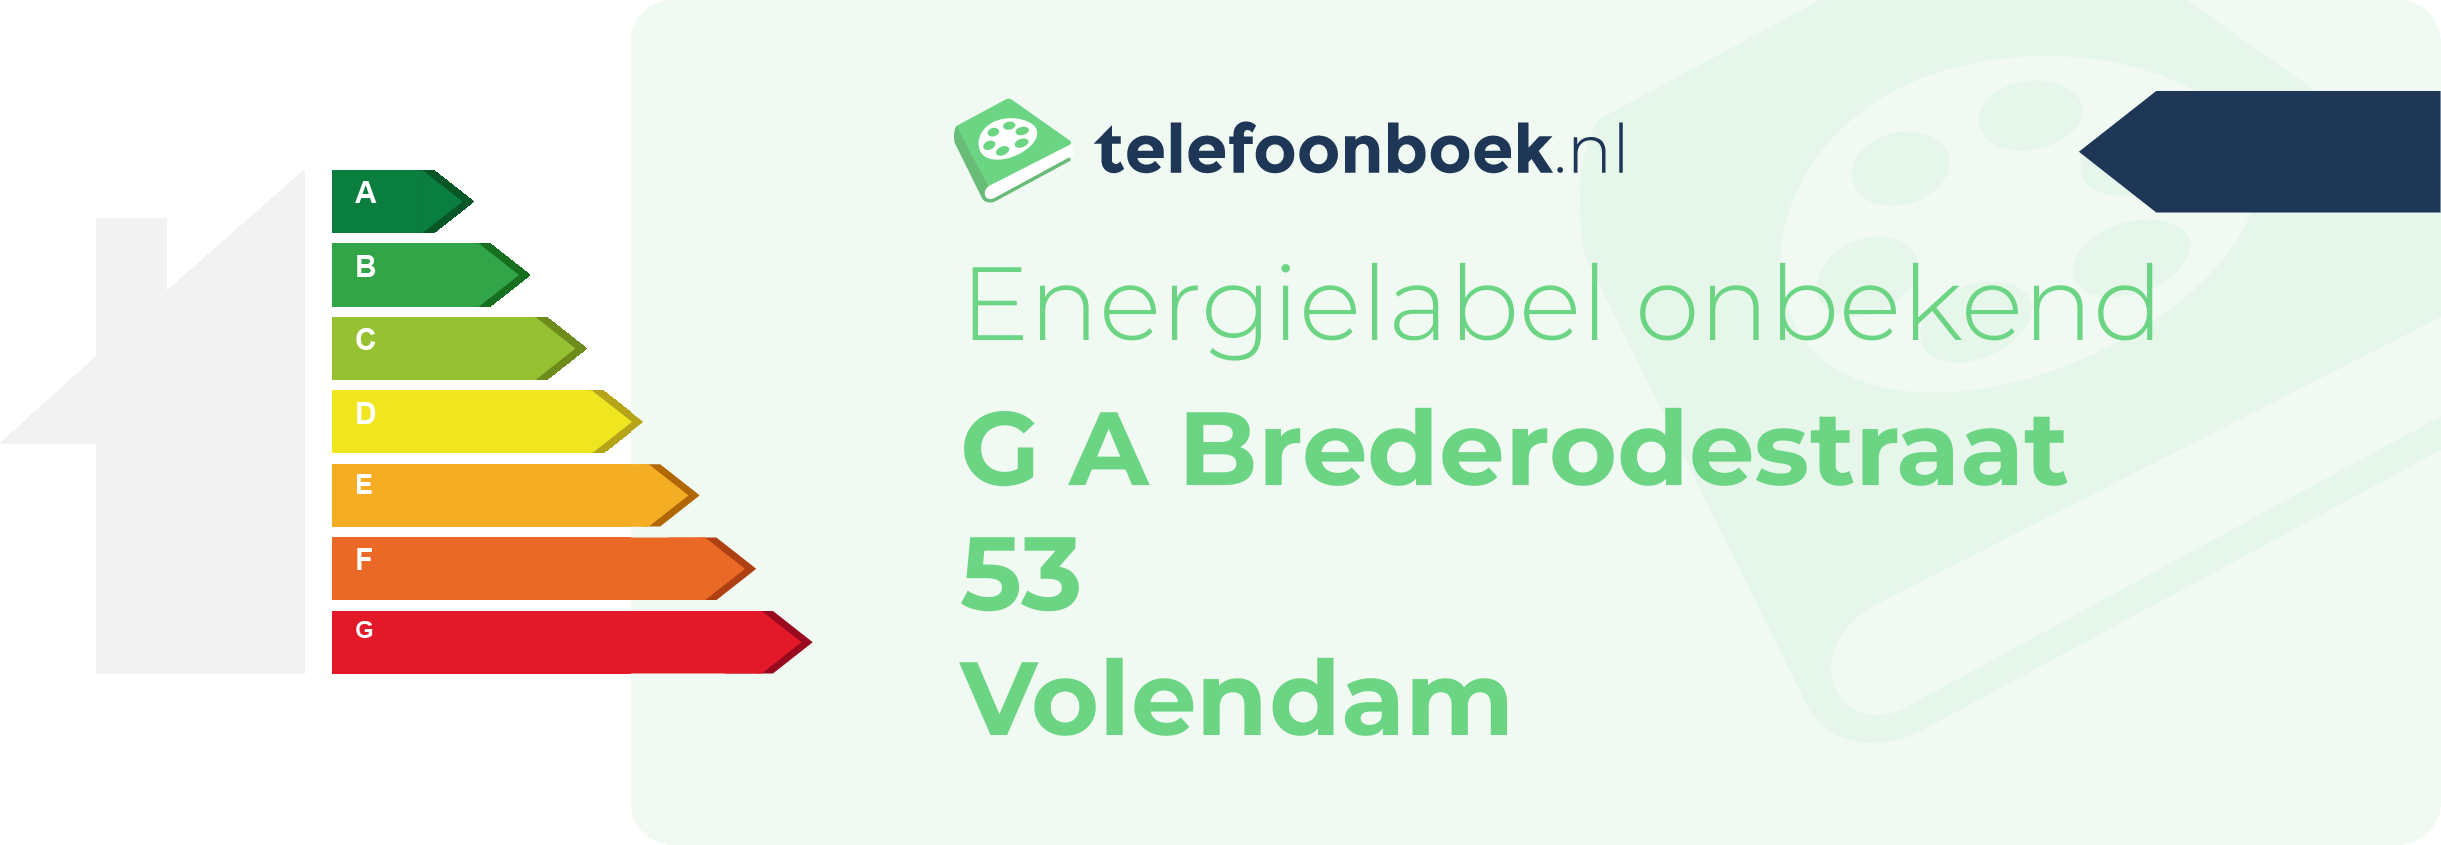 Energielabel G A Brederodestraat 53 Volendam